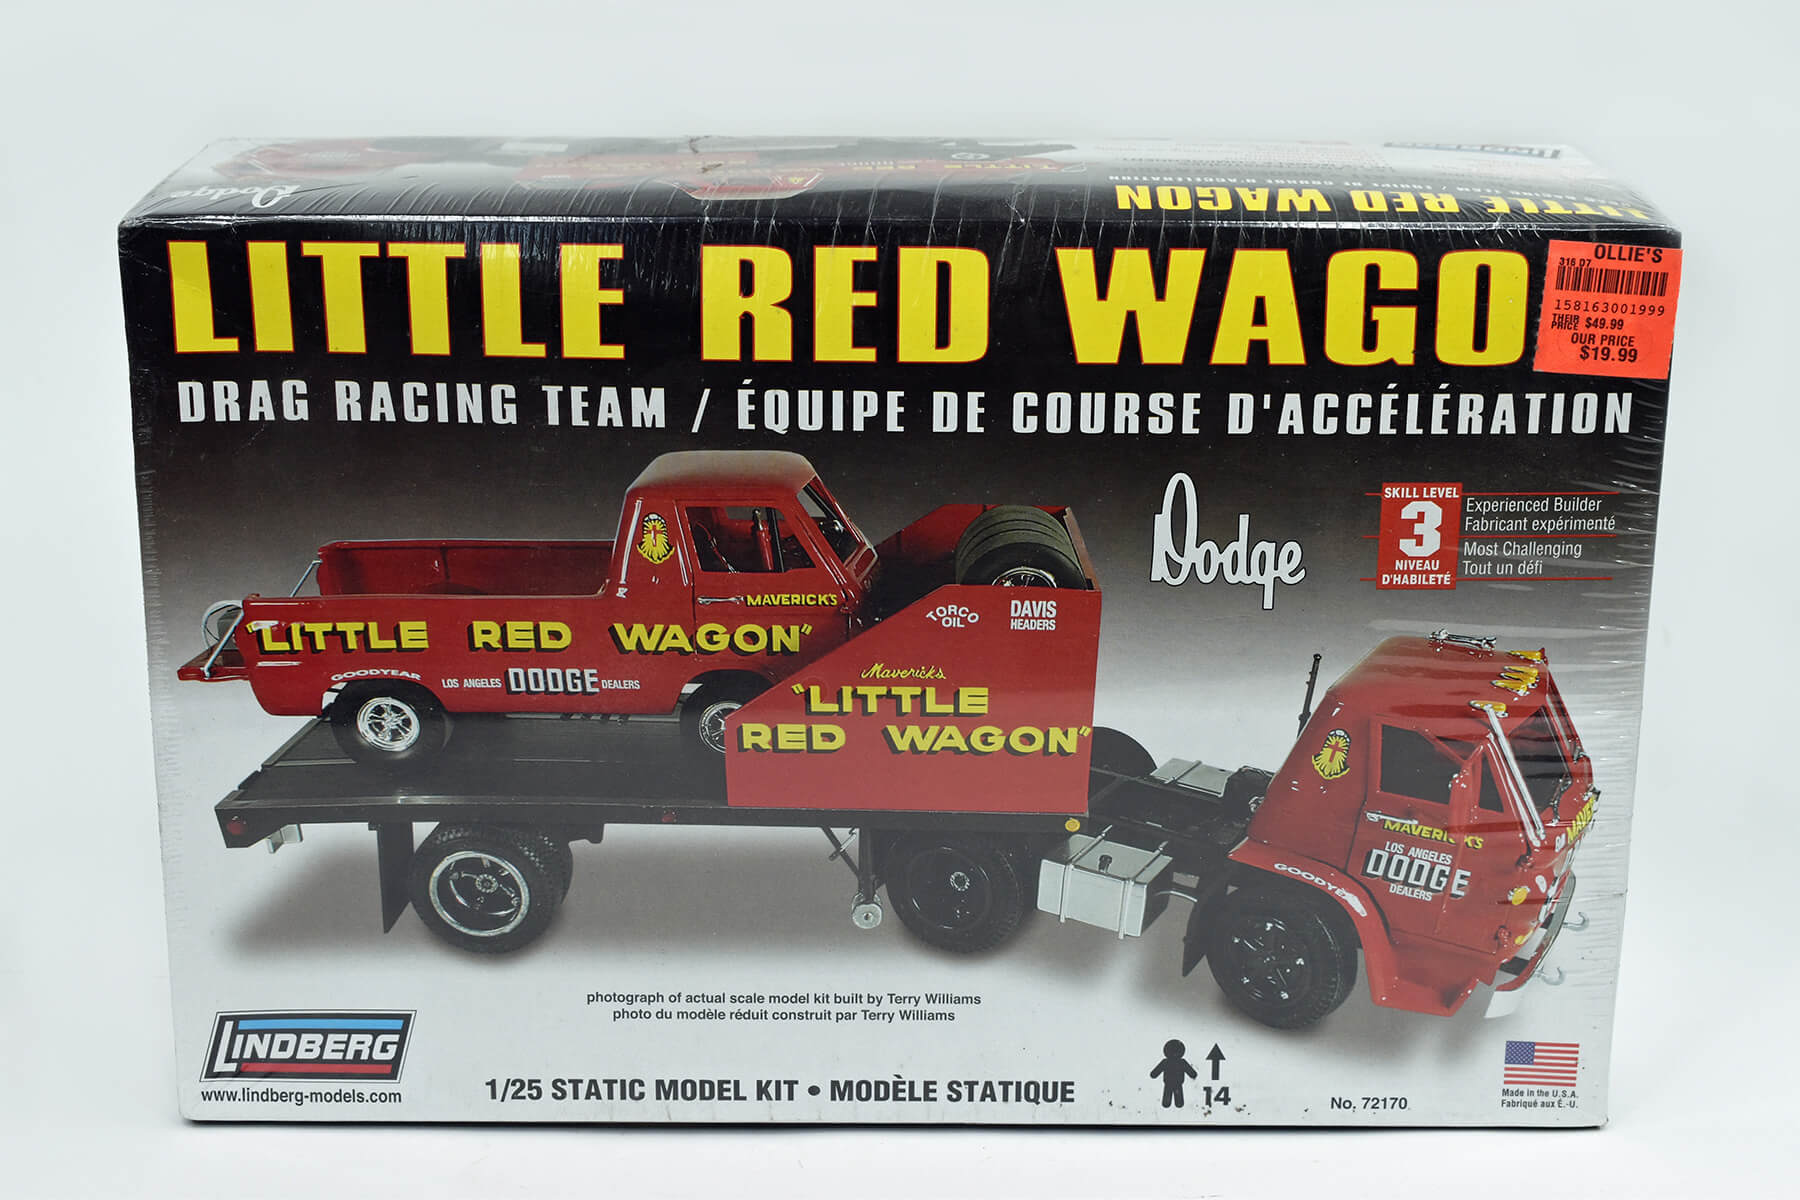 Lindberg Little Red Wagon Drag Racing Team 1:25 Static Model Kit